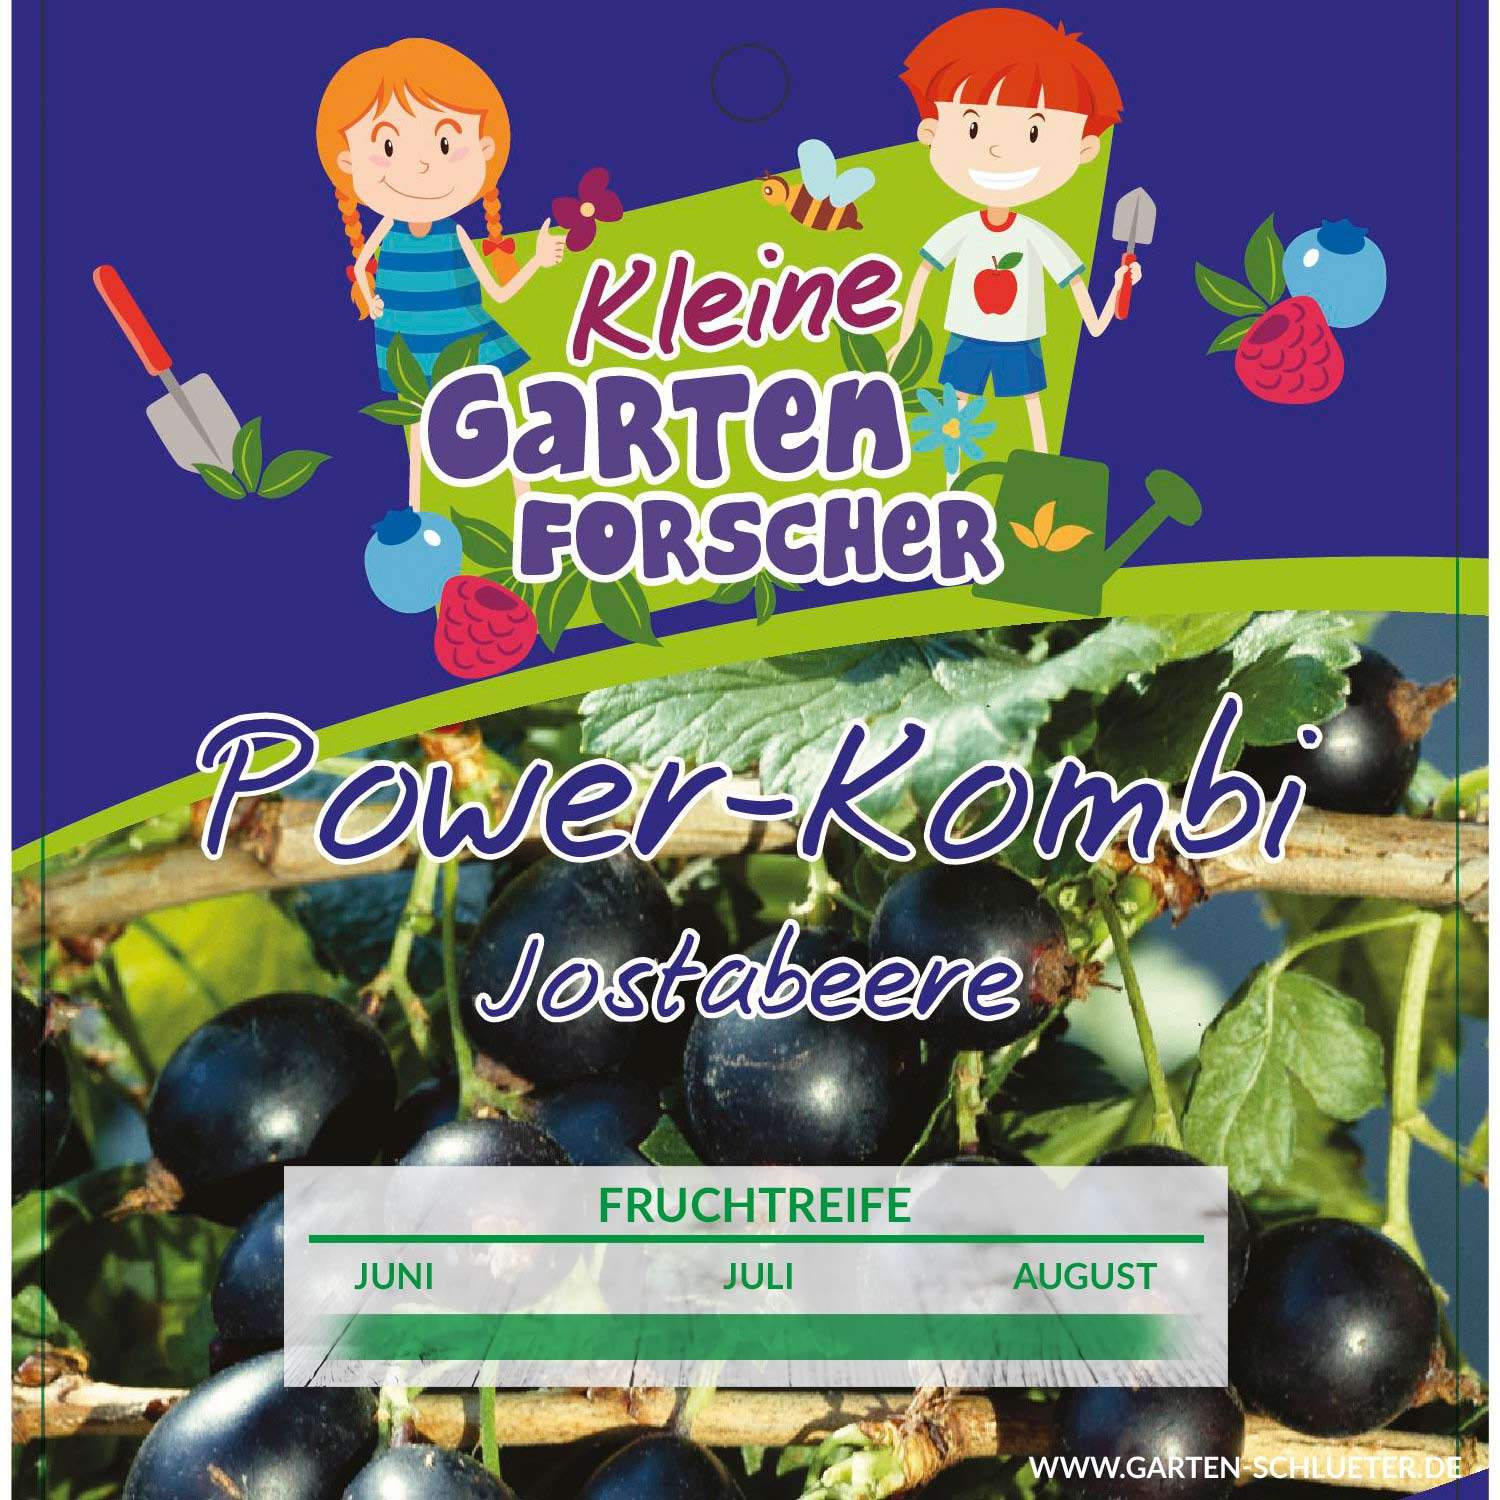 1 Jostabeere Power Kombi Kleine Gartenforscher Ribes Jostabeerei22gHEOcYhLGc